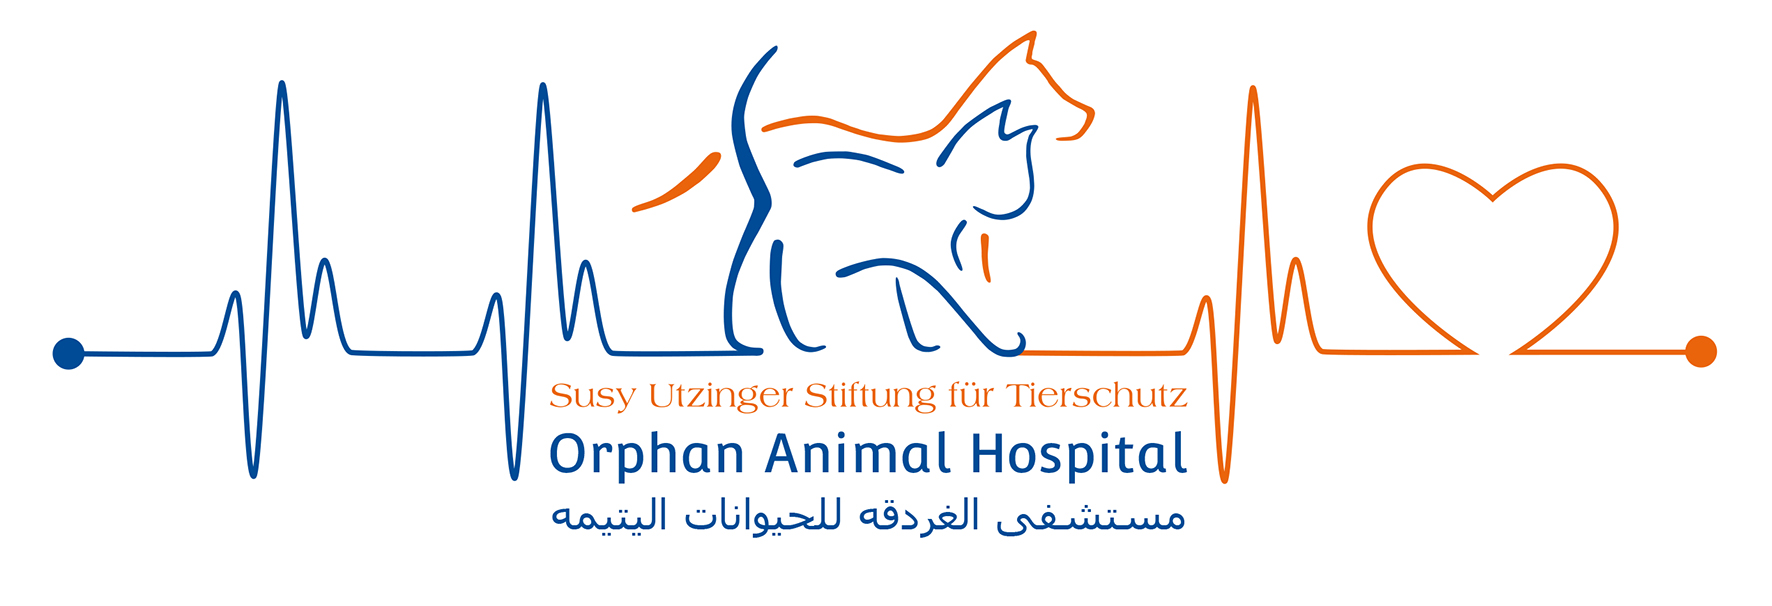 SUST Orphan Animal Hospital